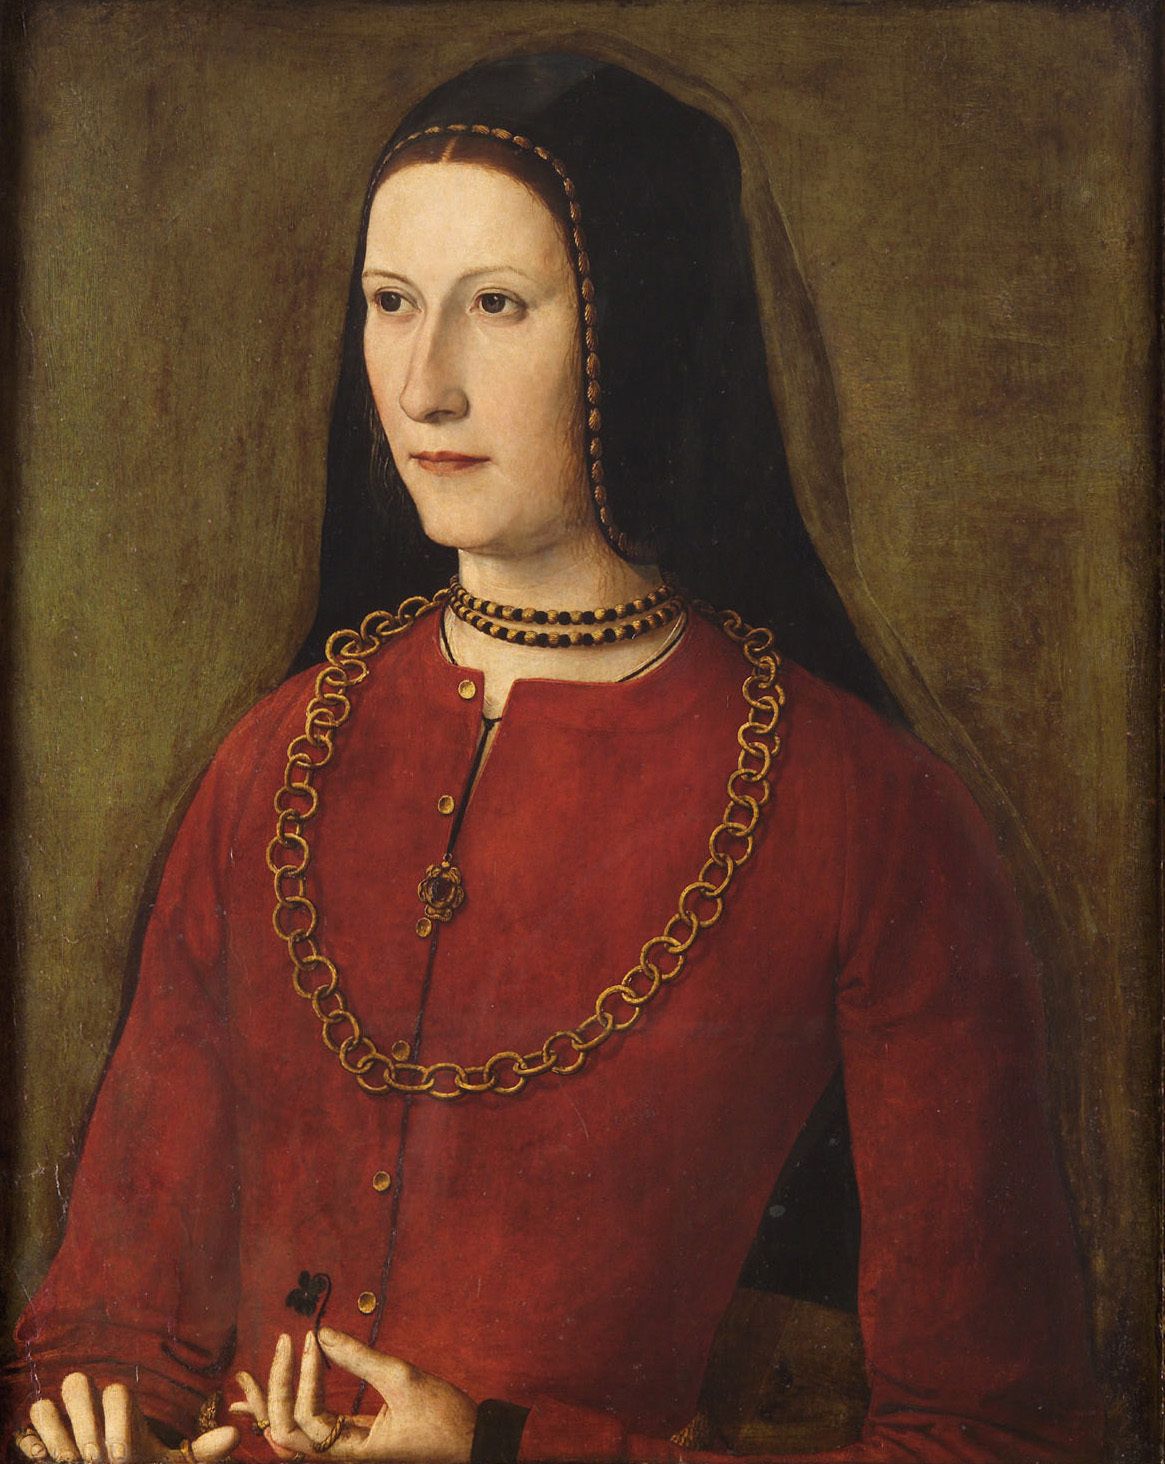 anonymous French portrait, c. 1500. Kunsthistorisches Museum Vienna.